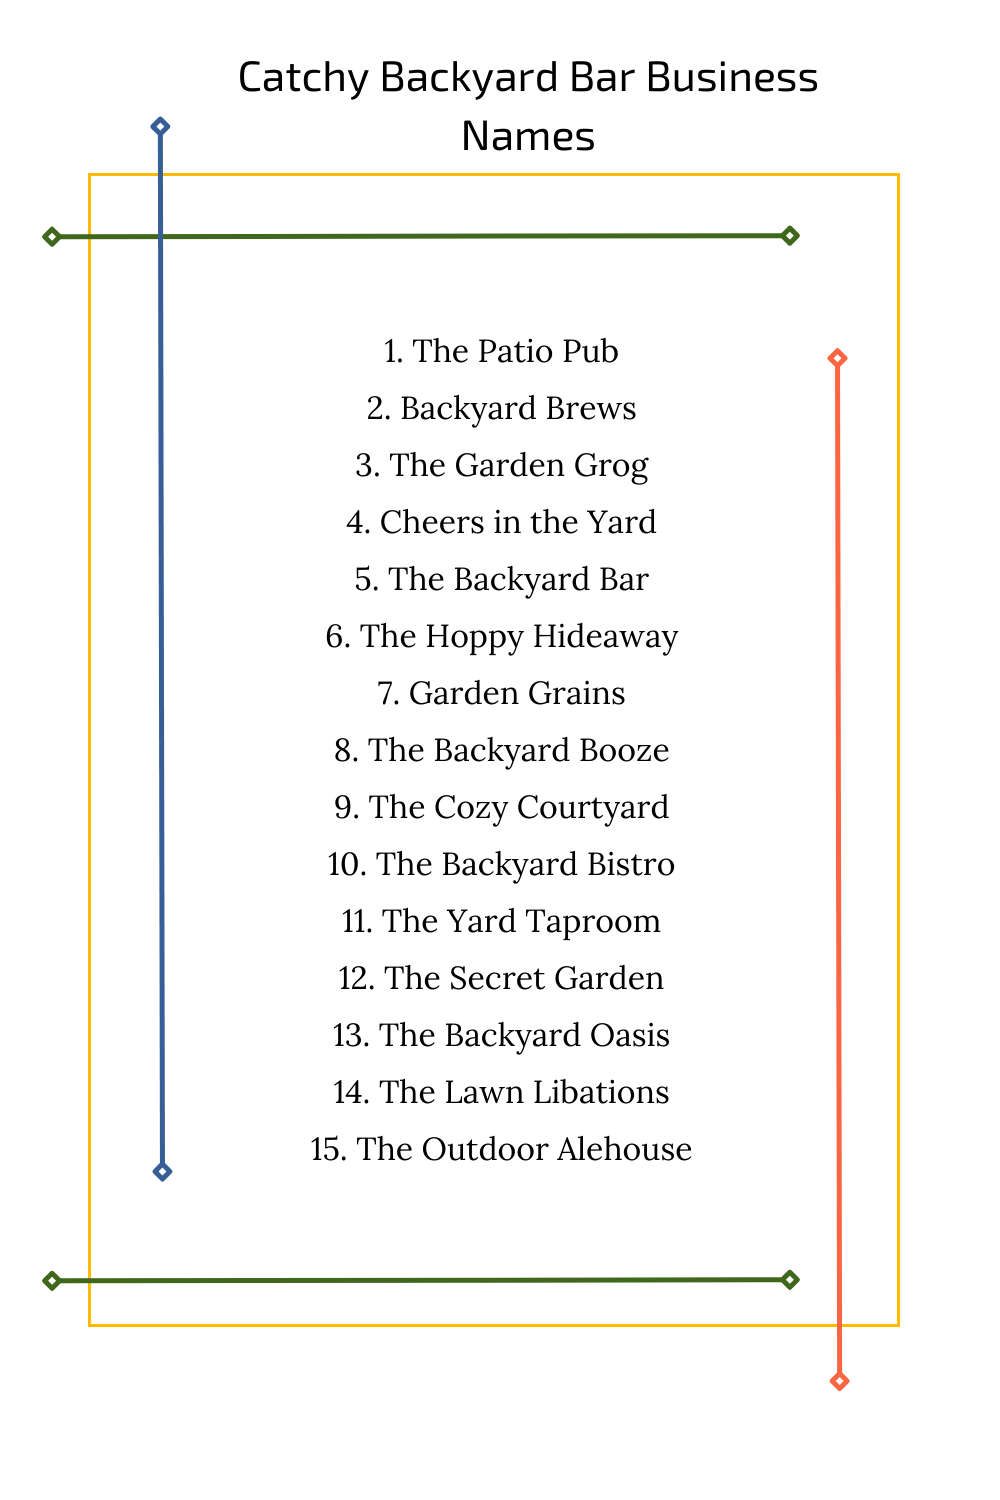 Catchy Backyard Bar Business Names